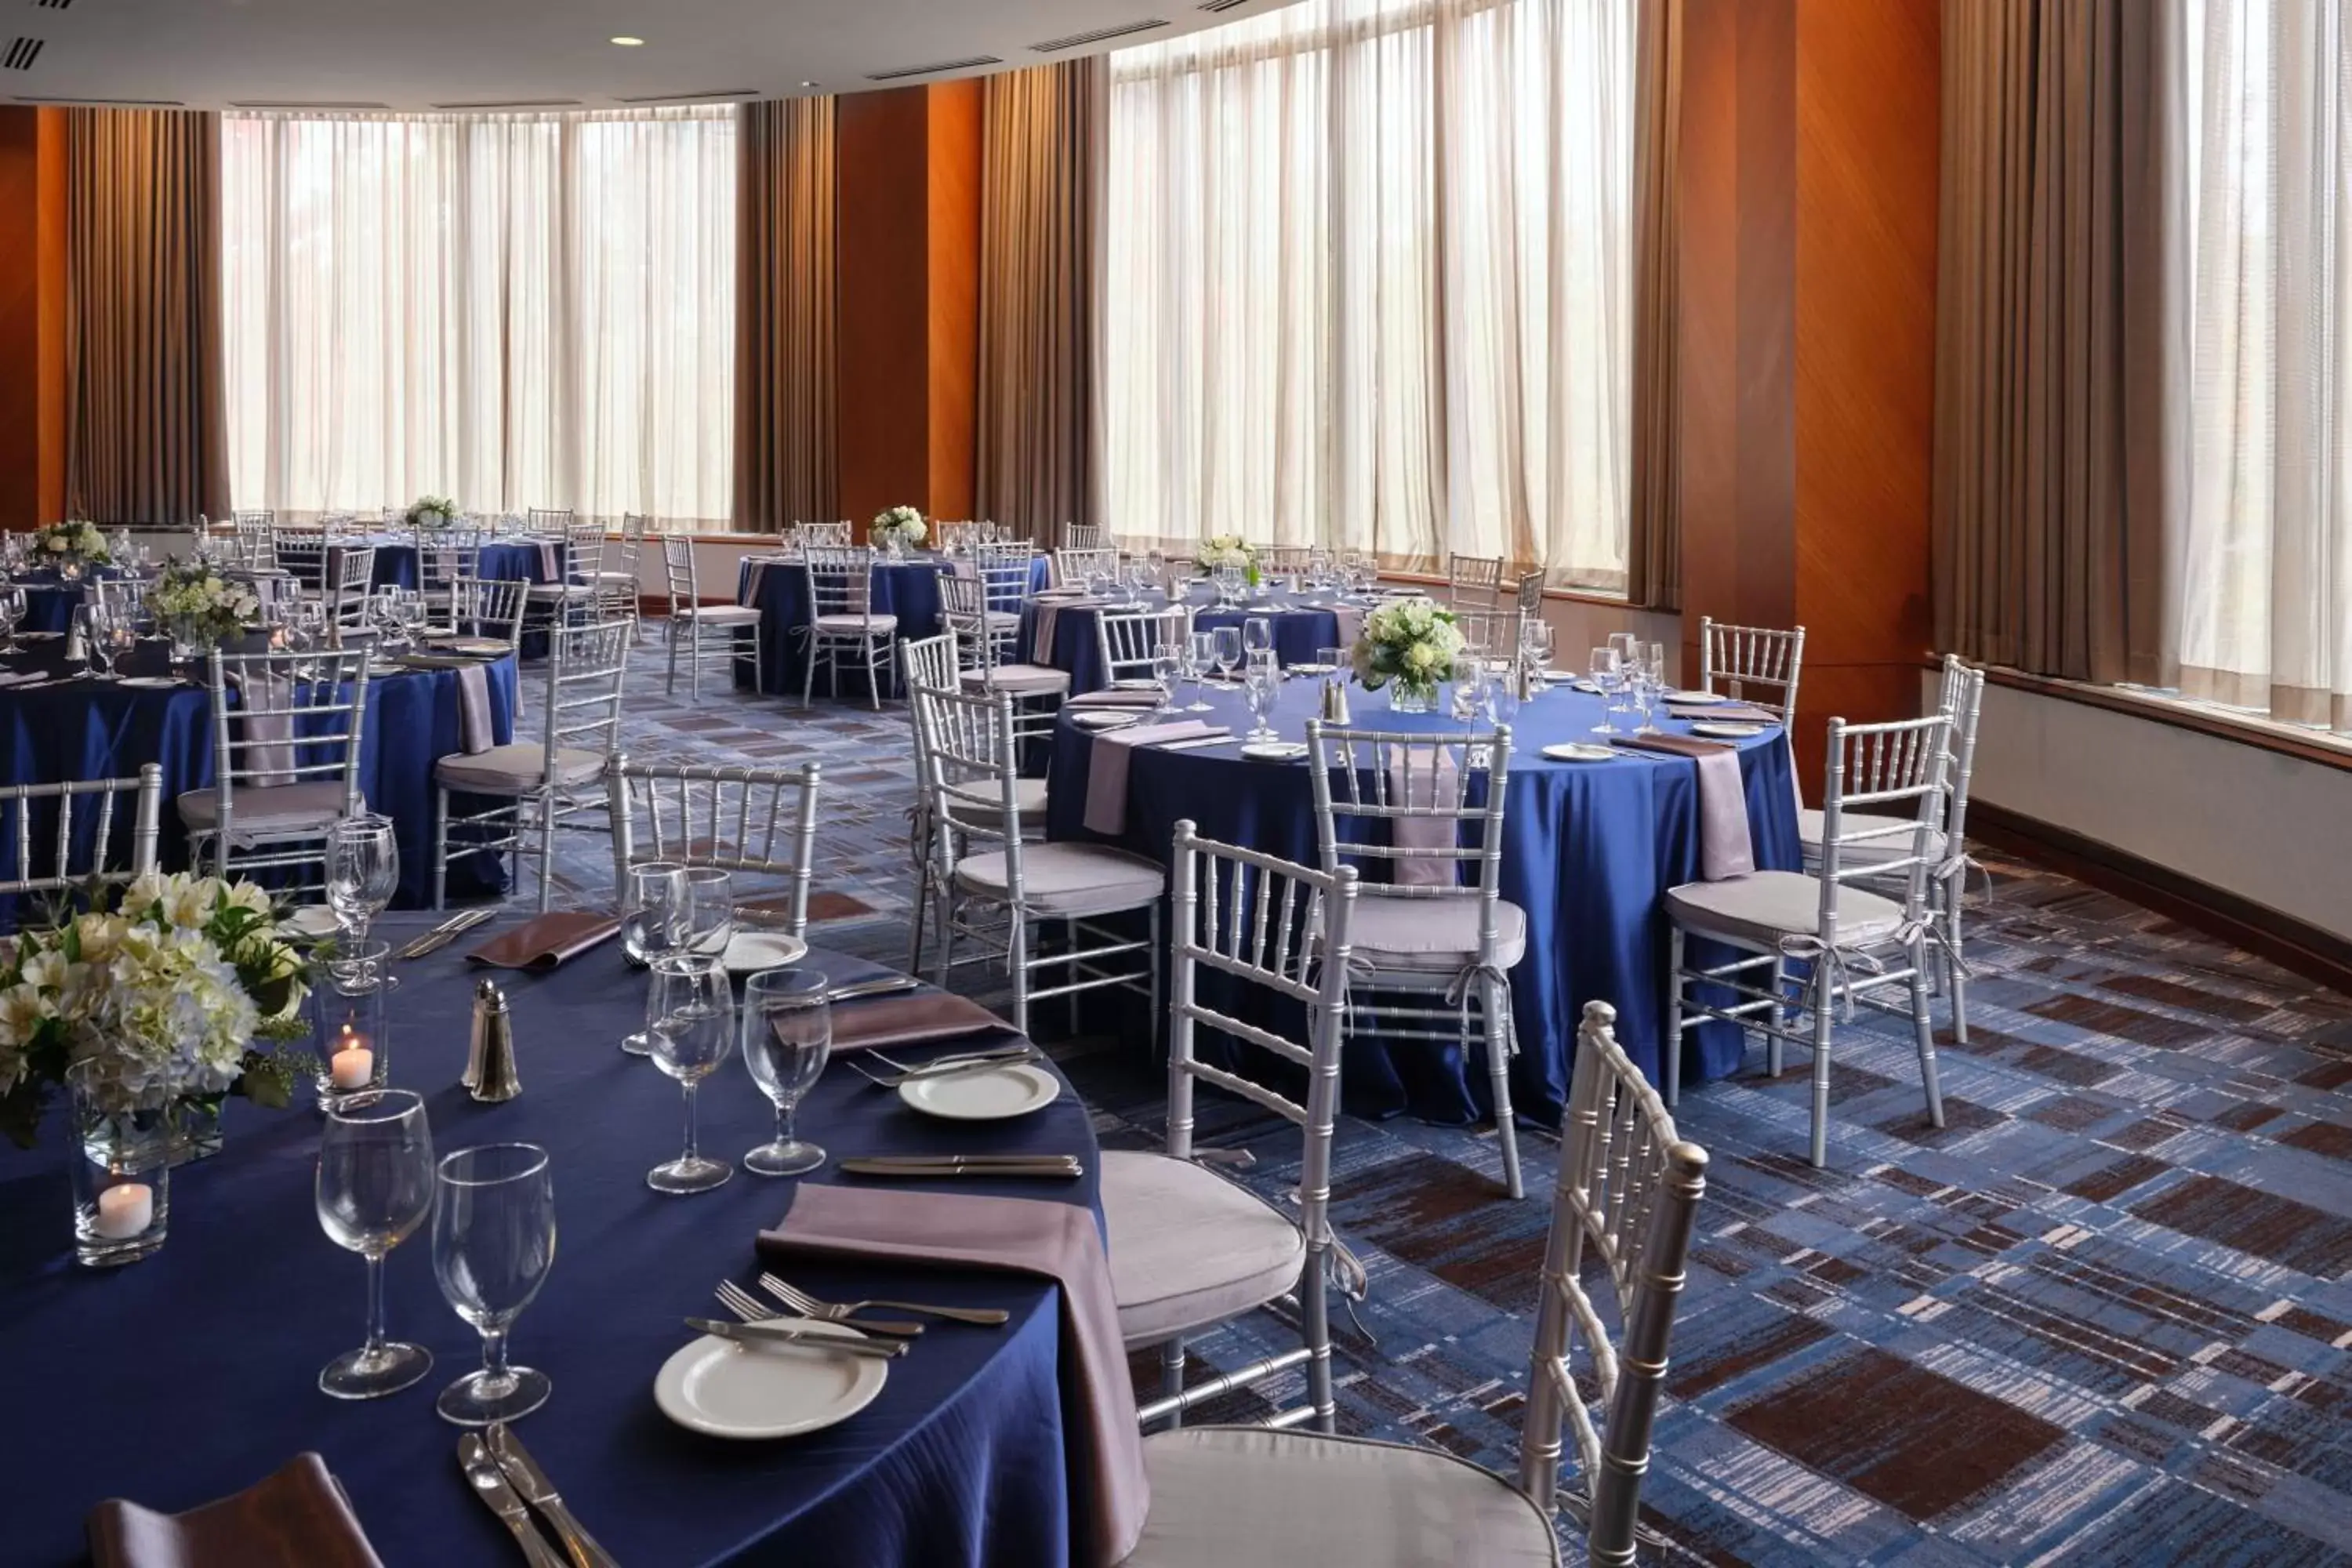 Meeting/conference room, Restaurant/Places to Eat in Nashville Marriott at Vanderbilt University